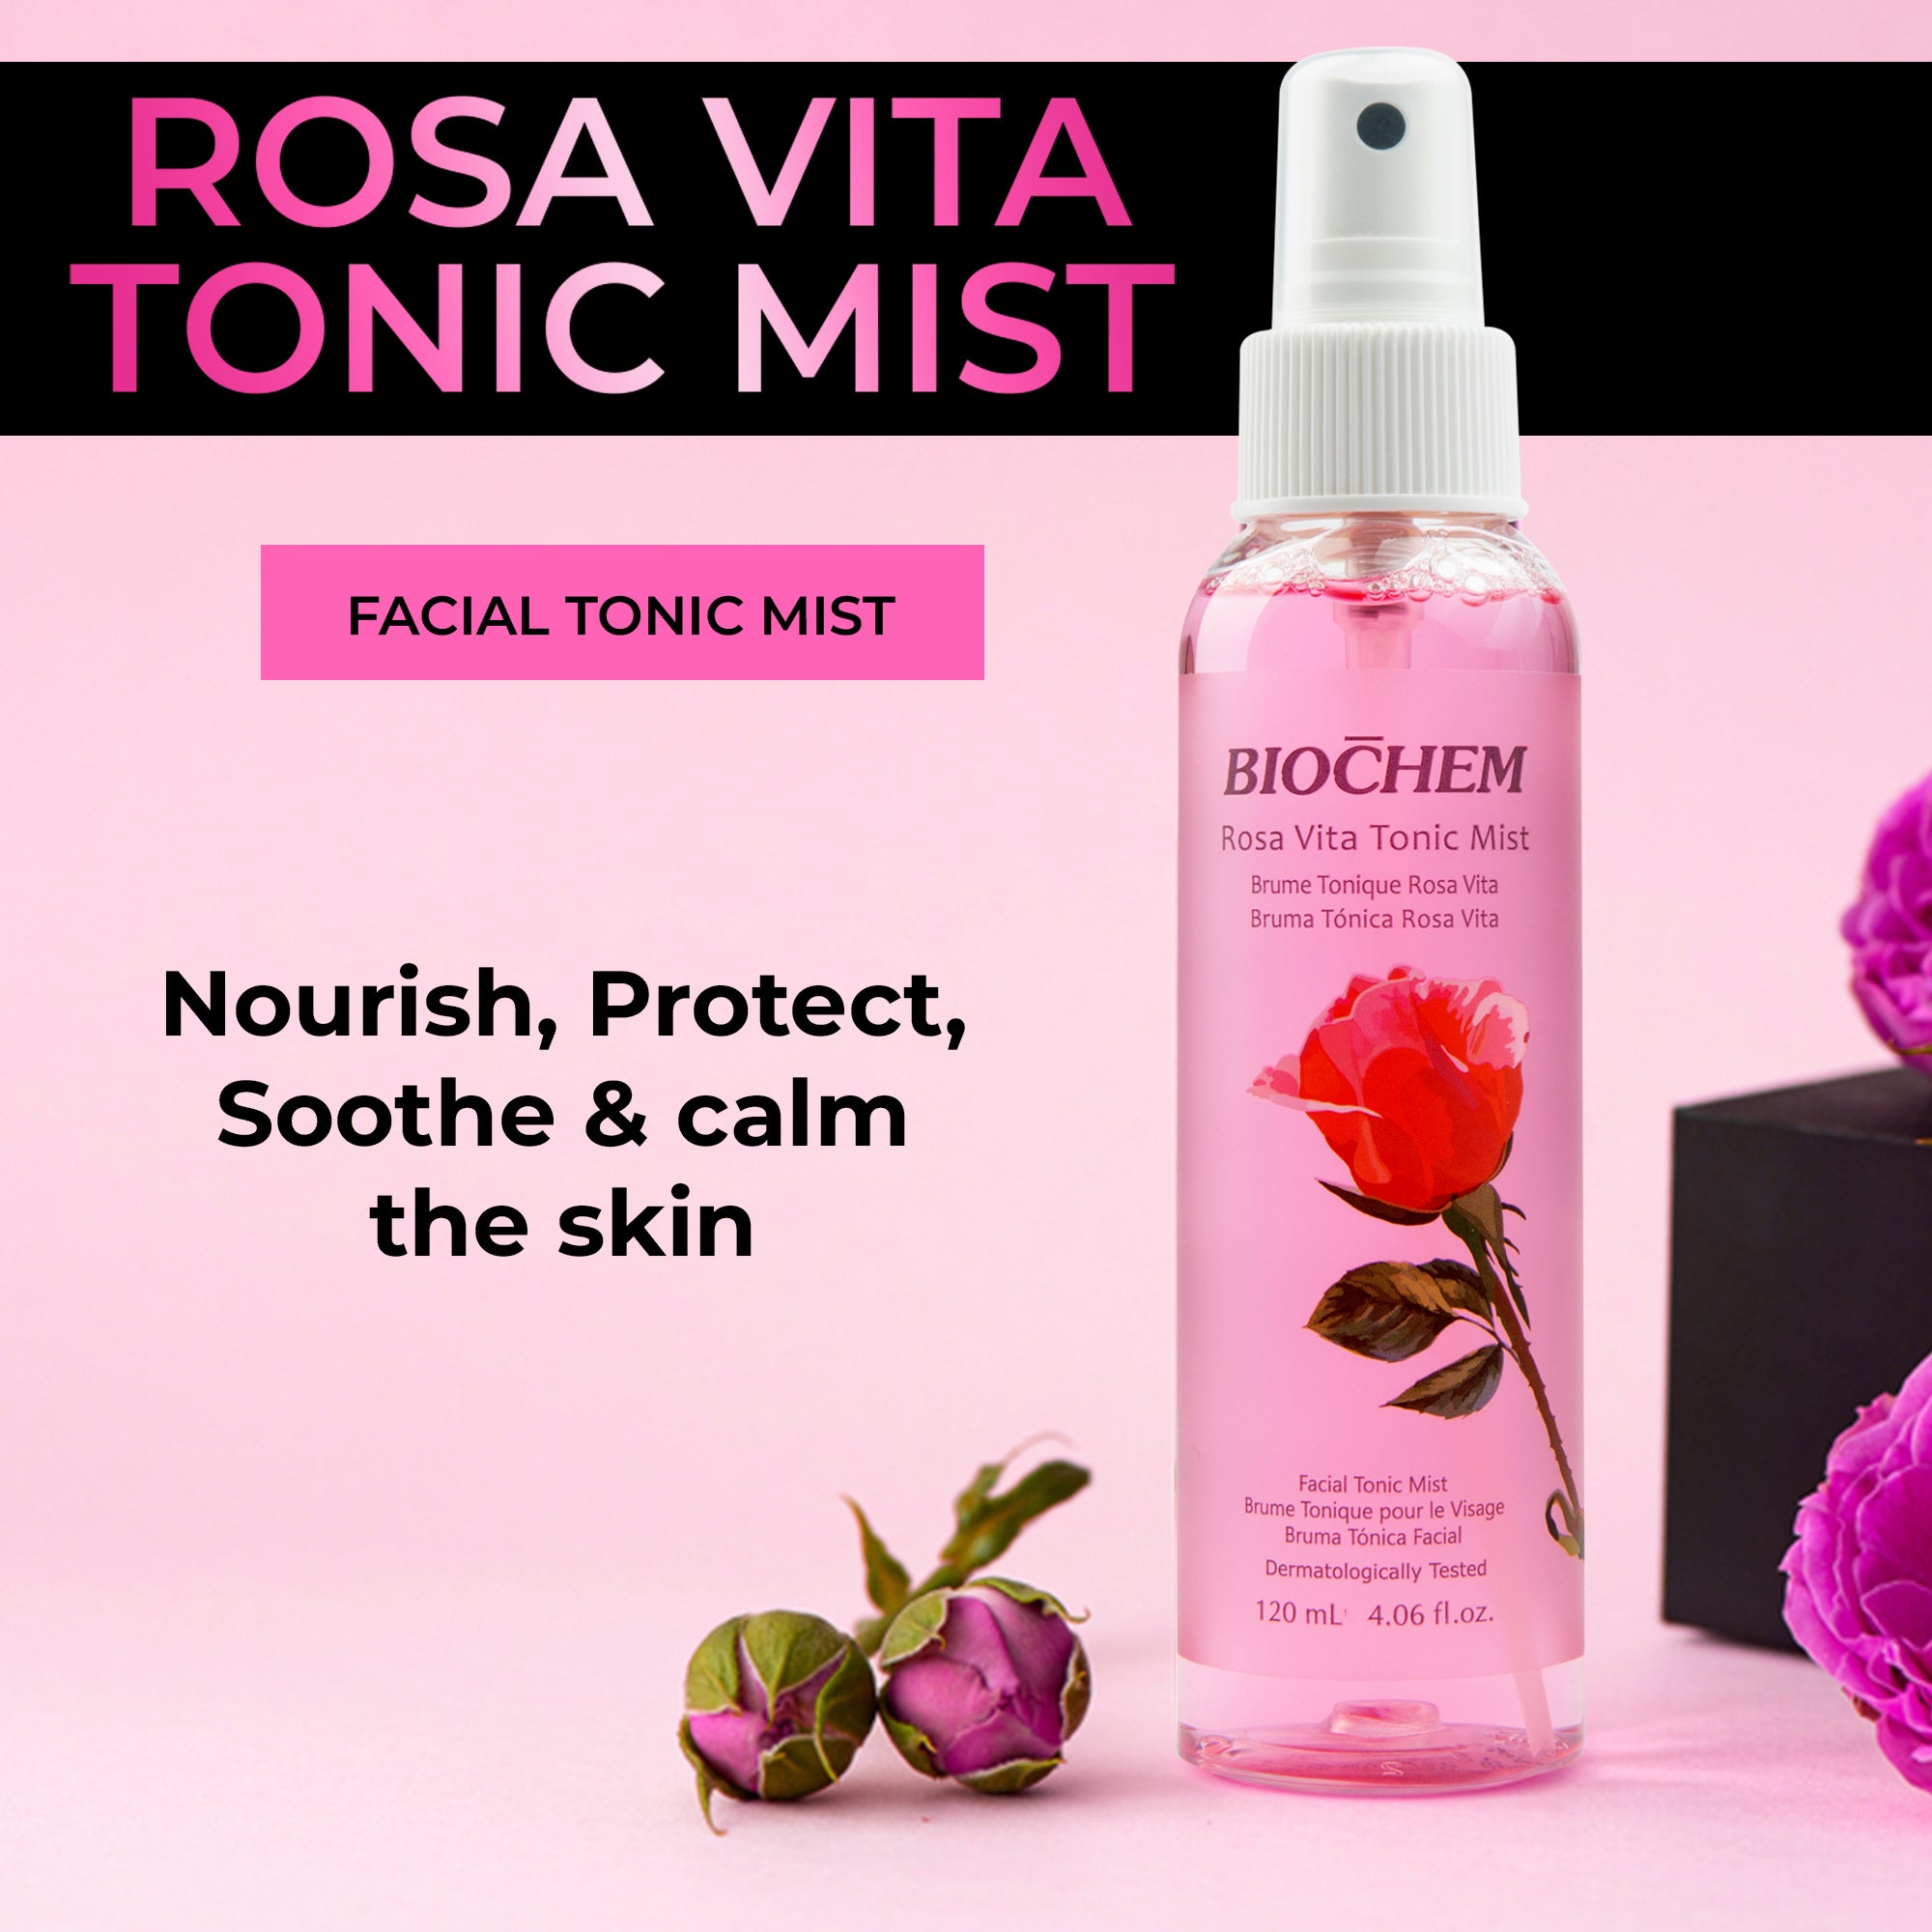 Why Rosa Vita Tonic Mist is Your Skin's Rejuvenating Adventure